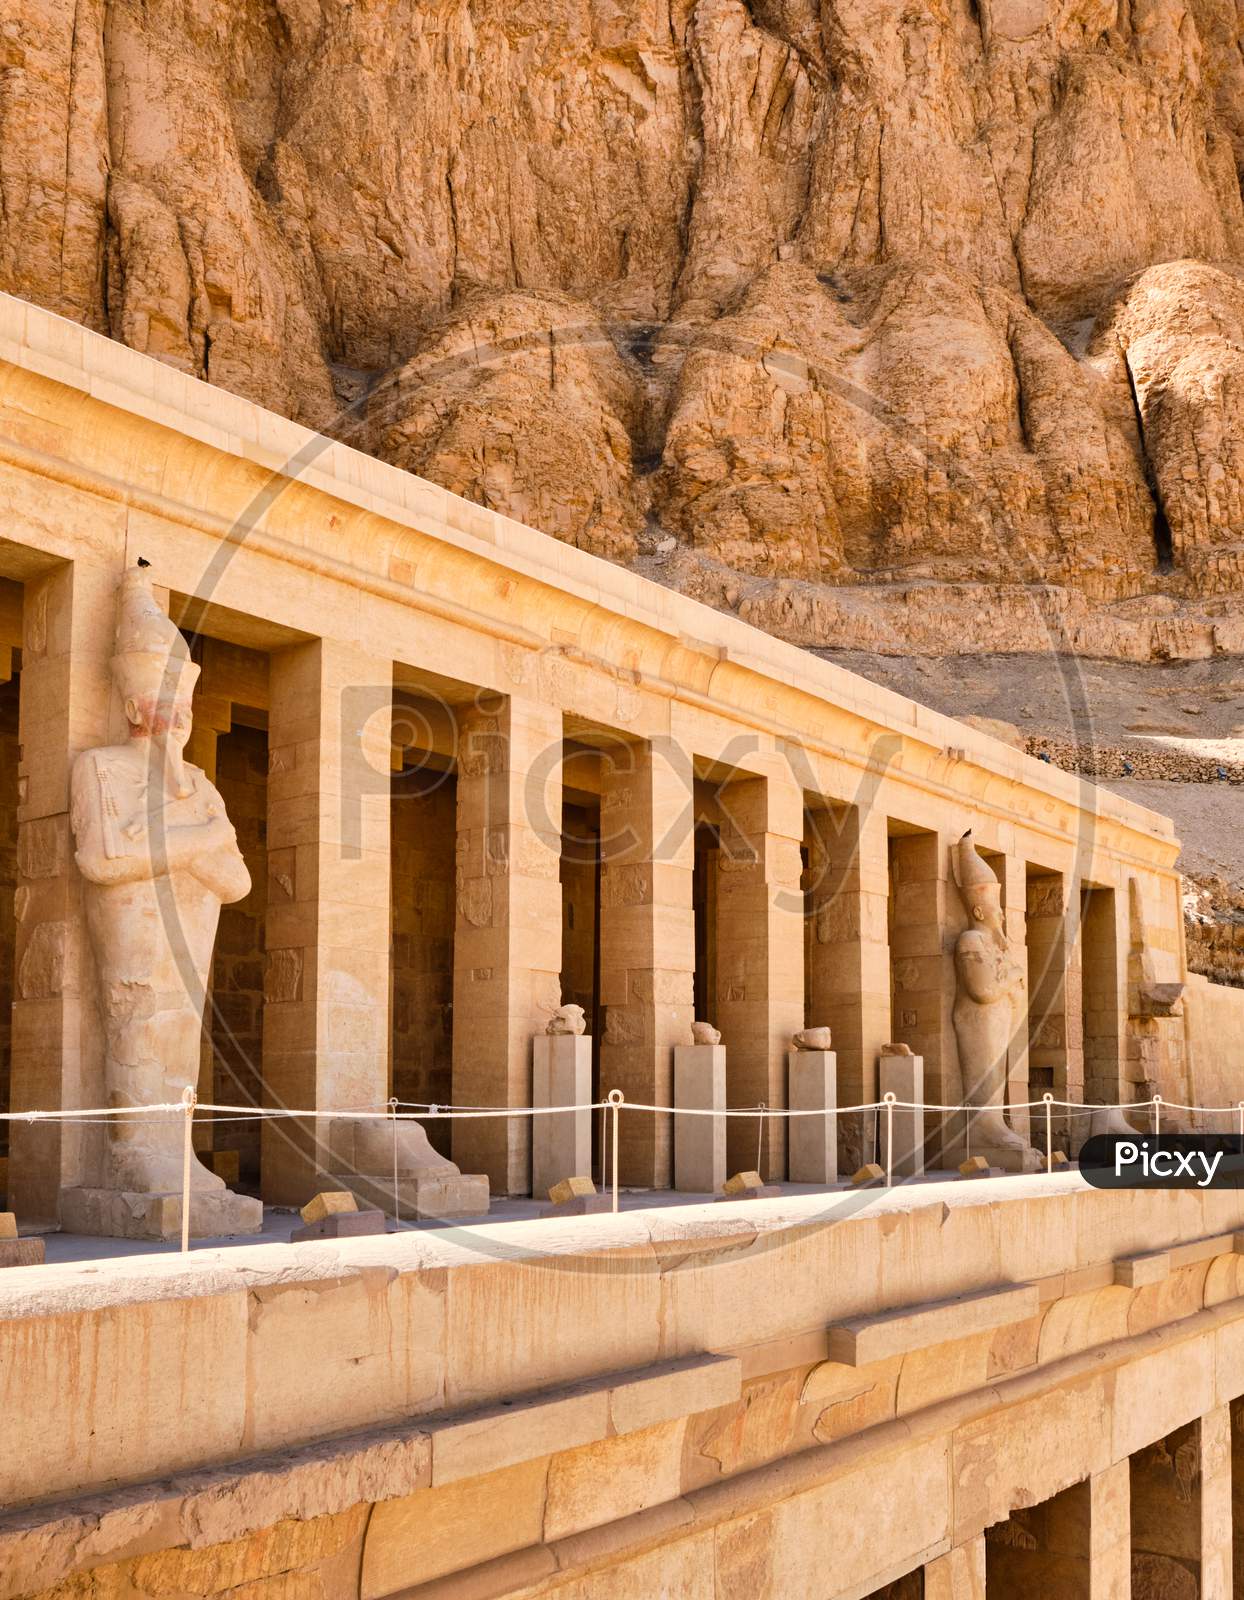 Mortuary Temple Of Hatshepsut In Luxor, Egypt